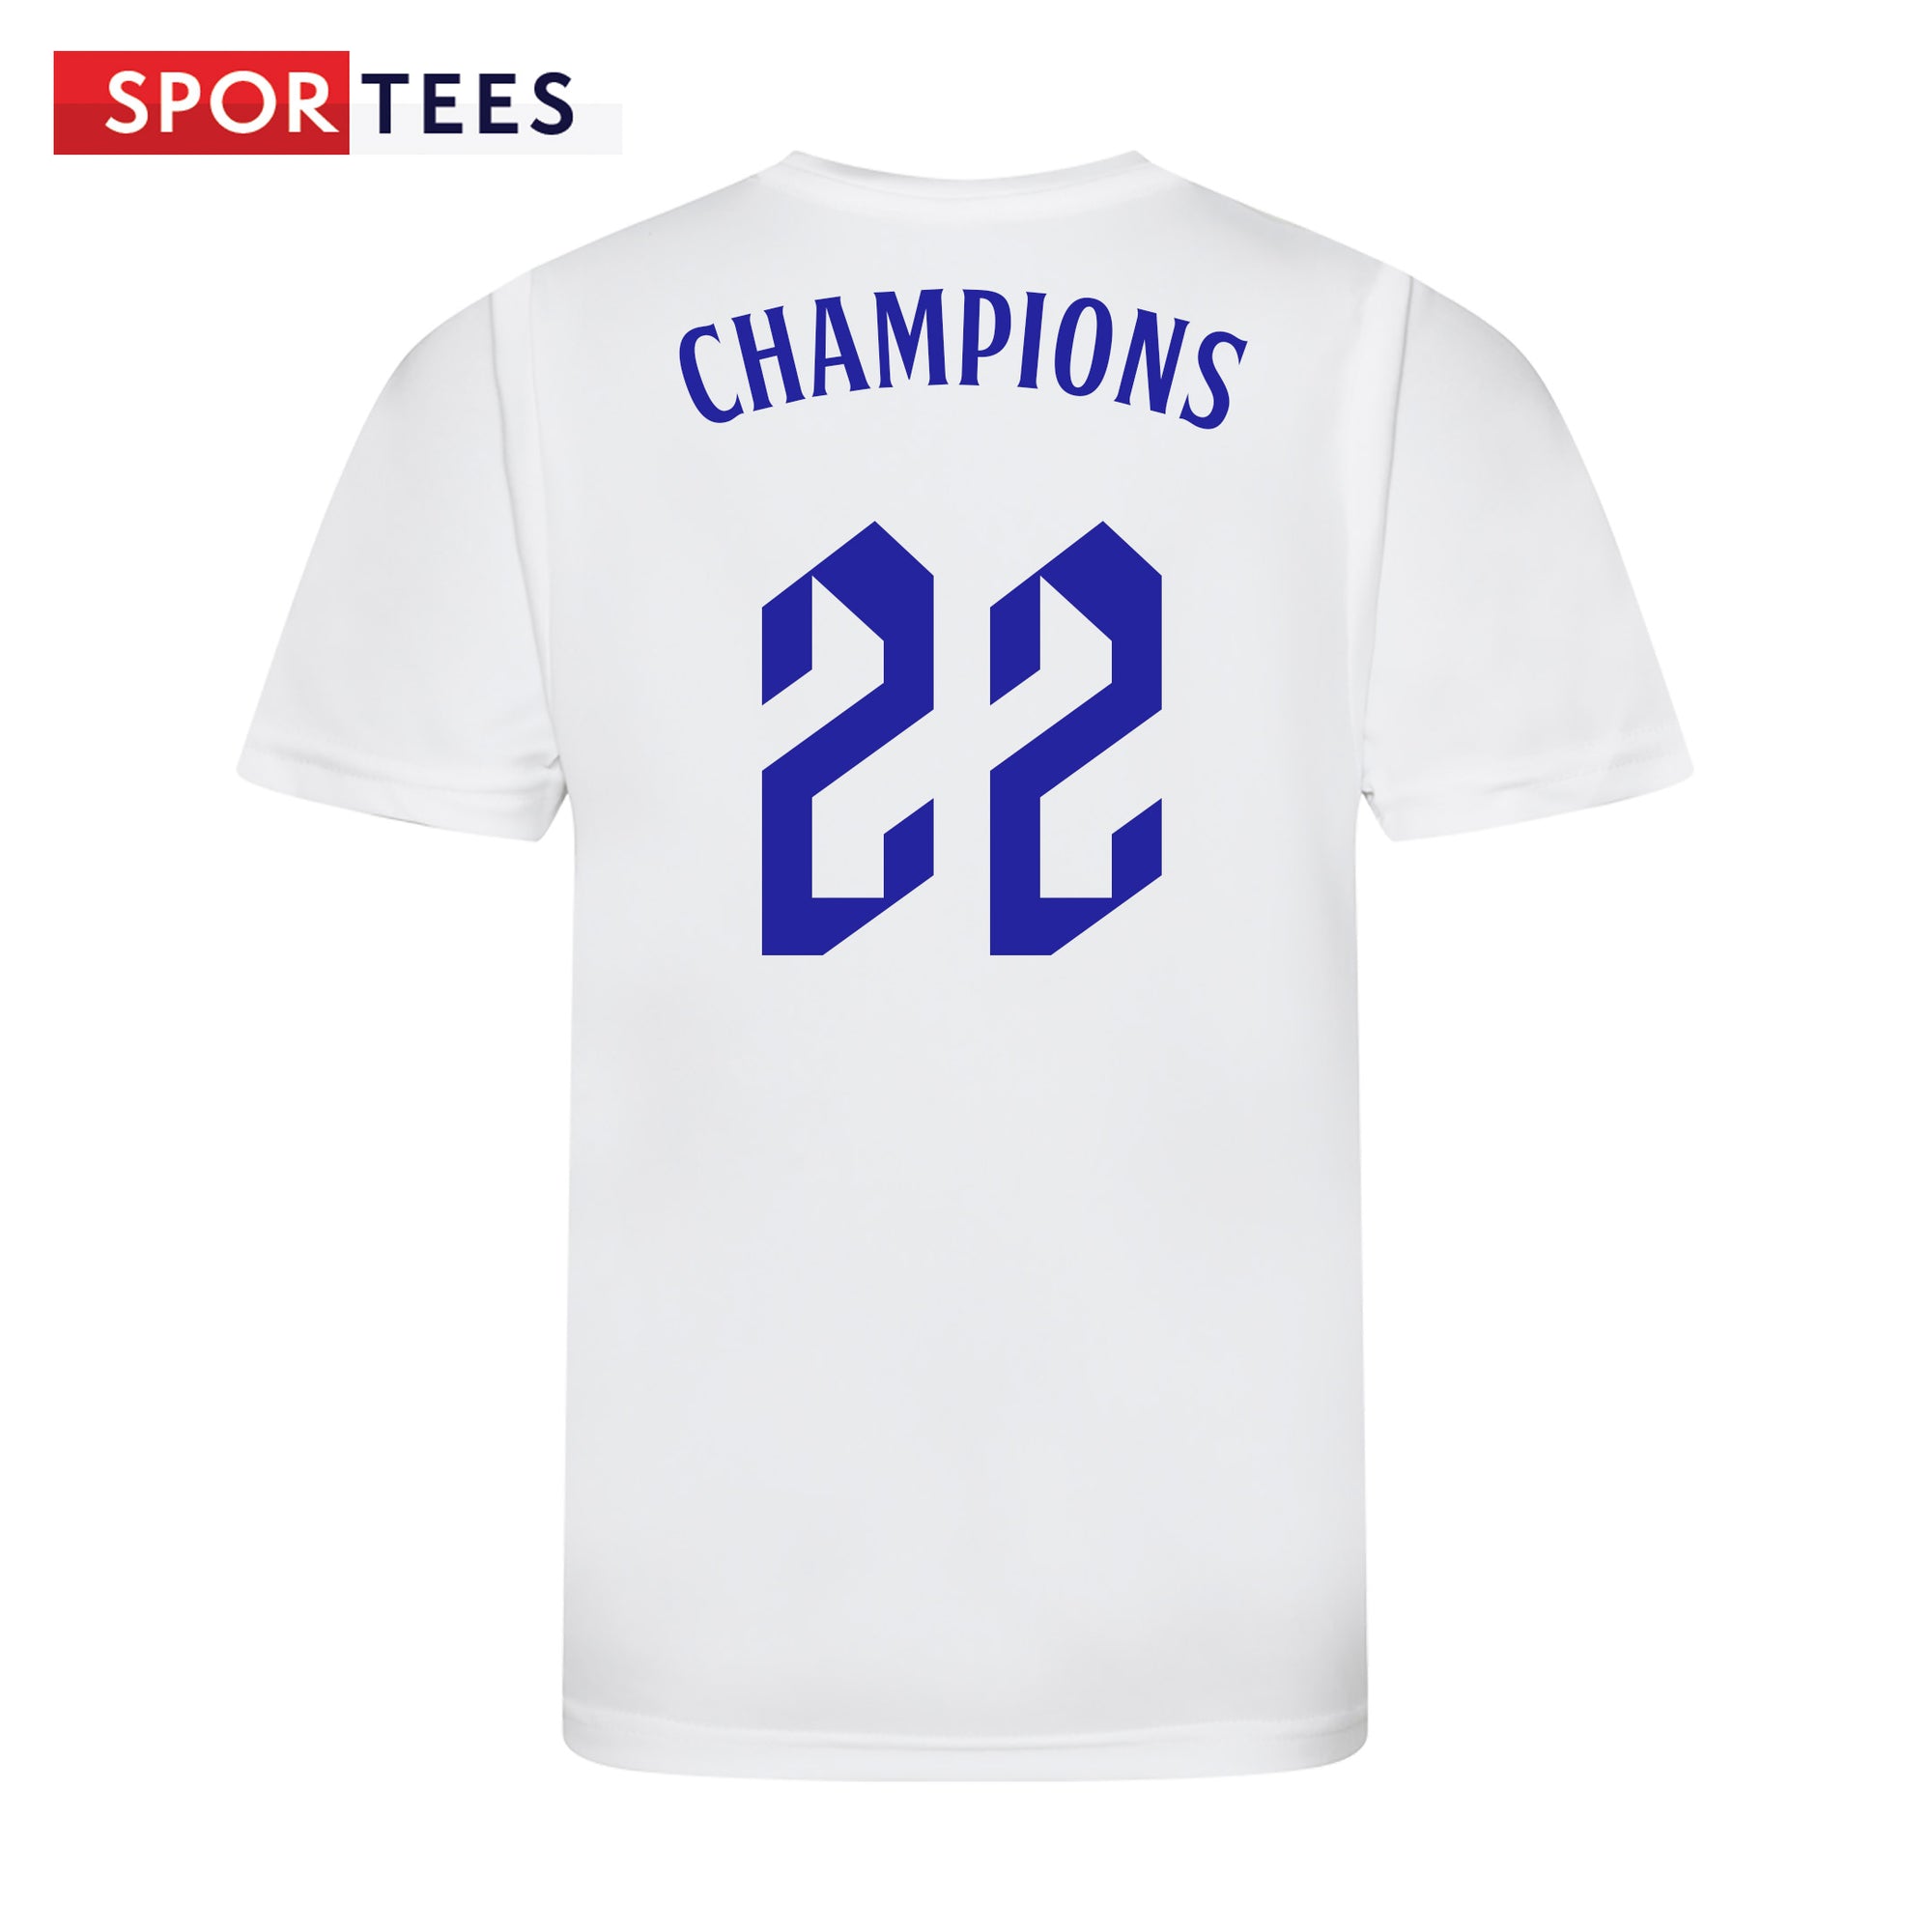 Champions 22 - England Euro 2022 Style White Home Shirt